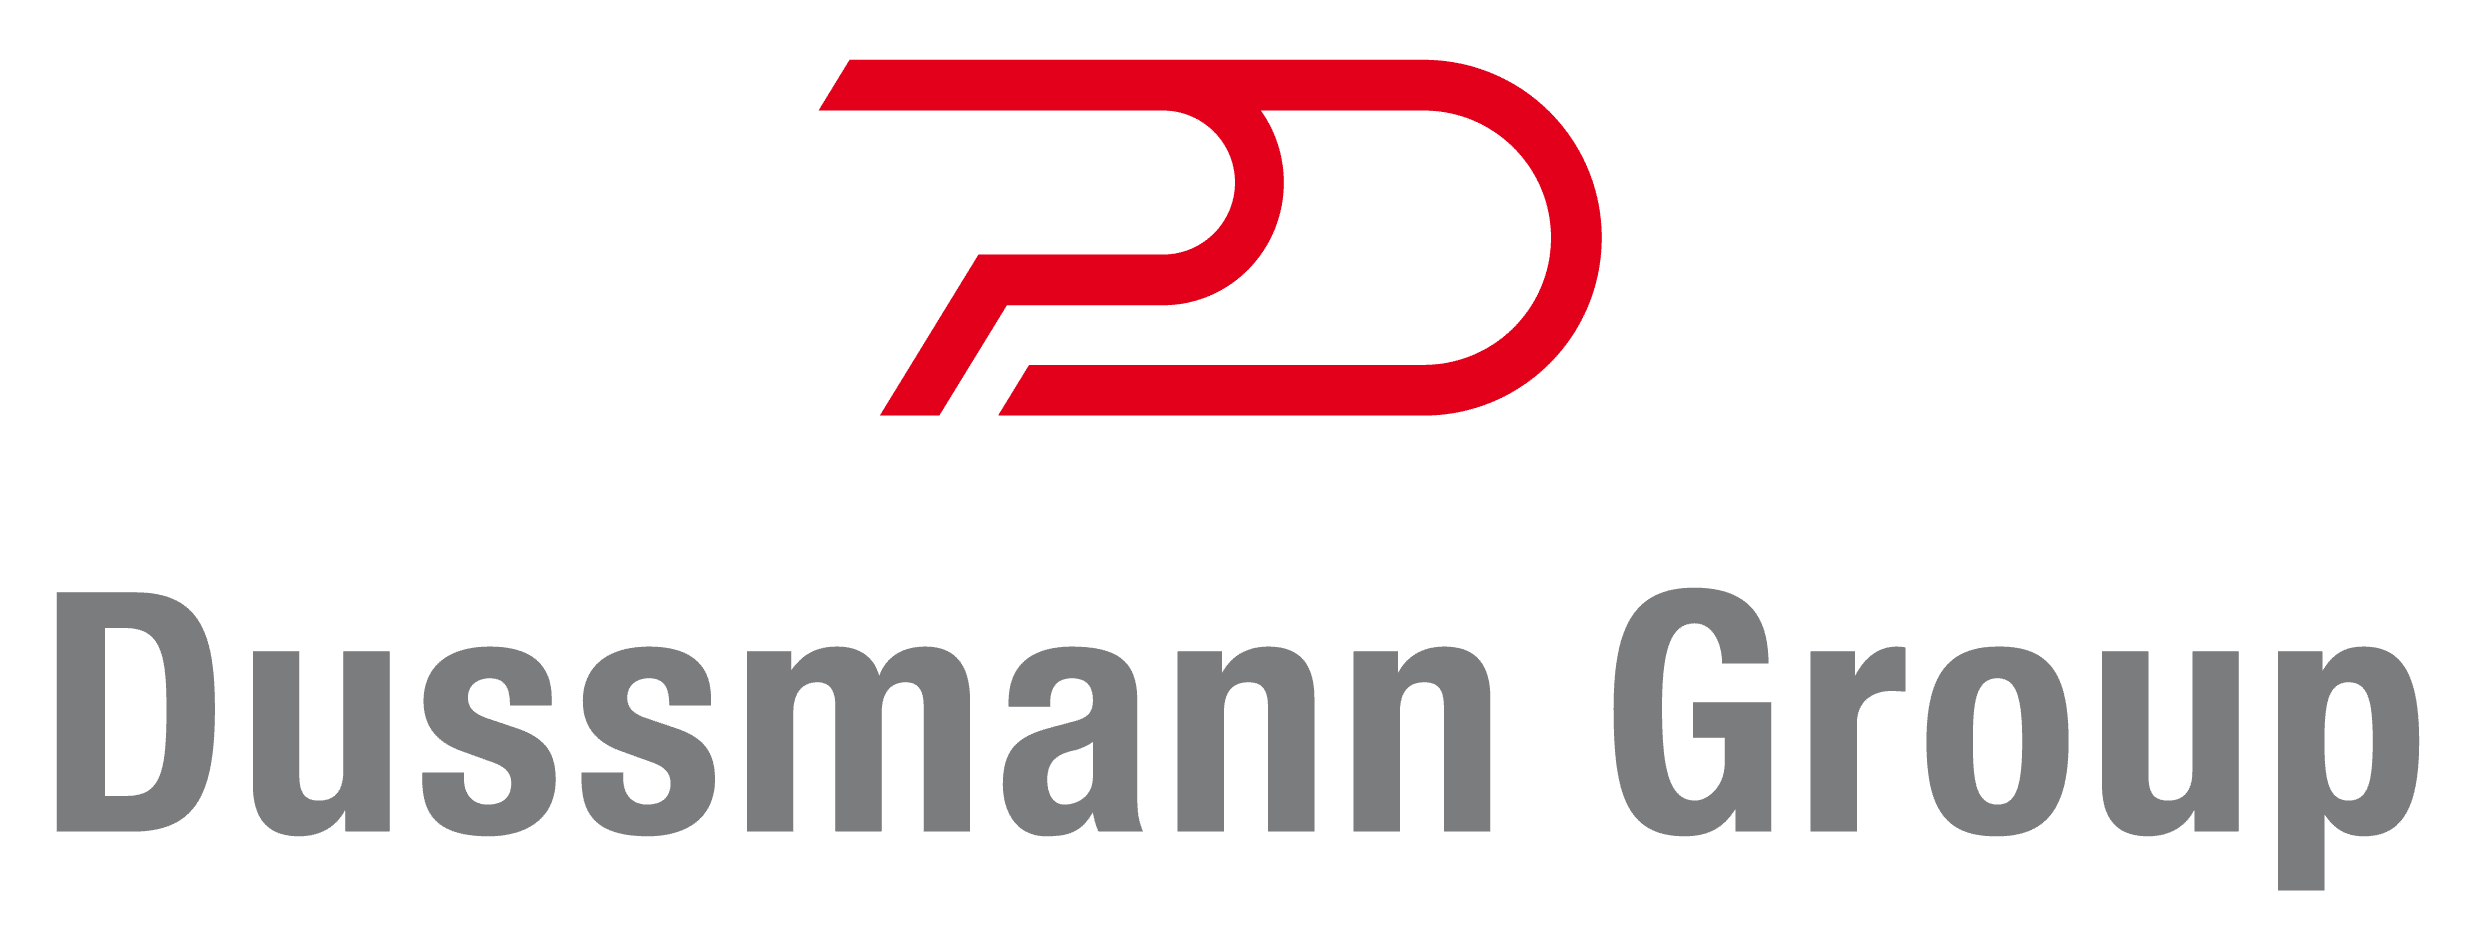 Dussman Group Logo